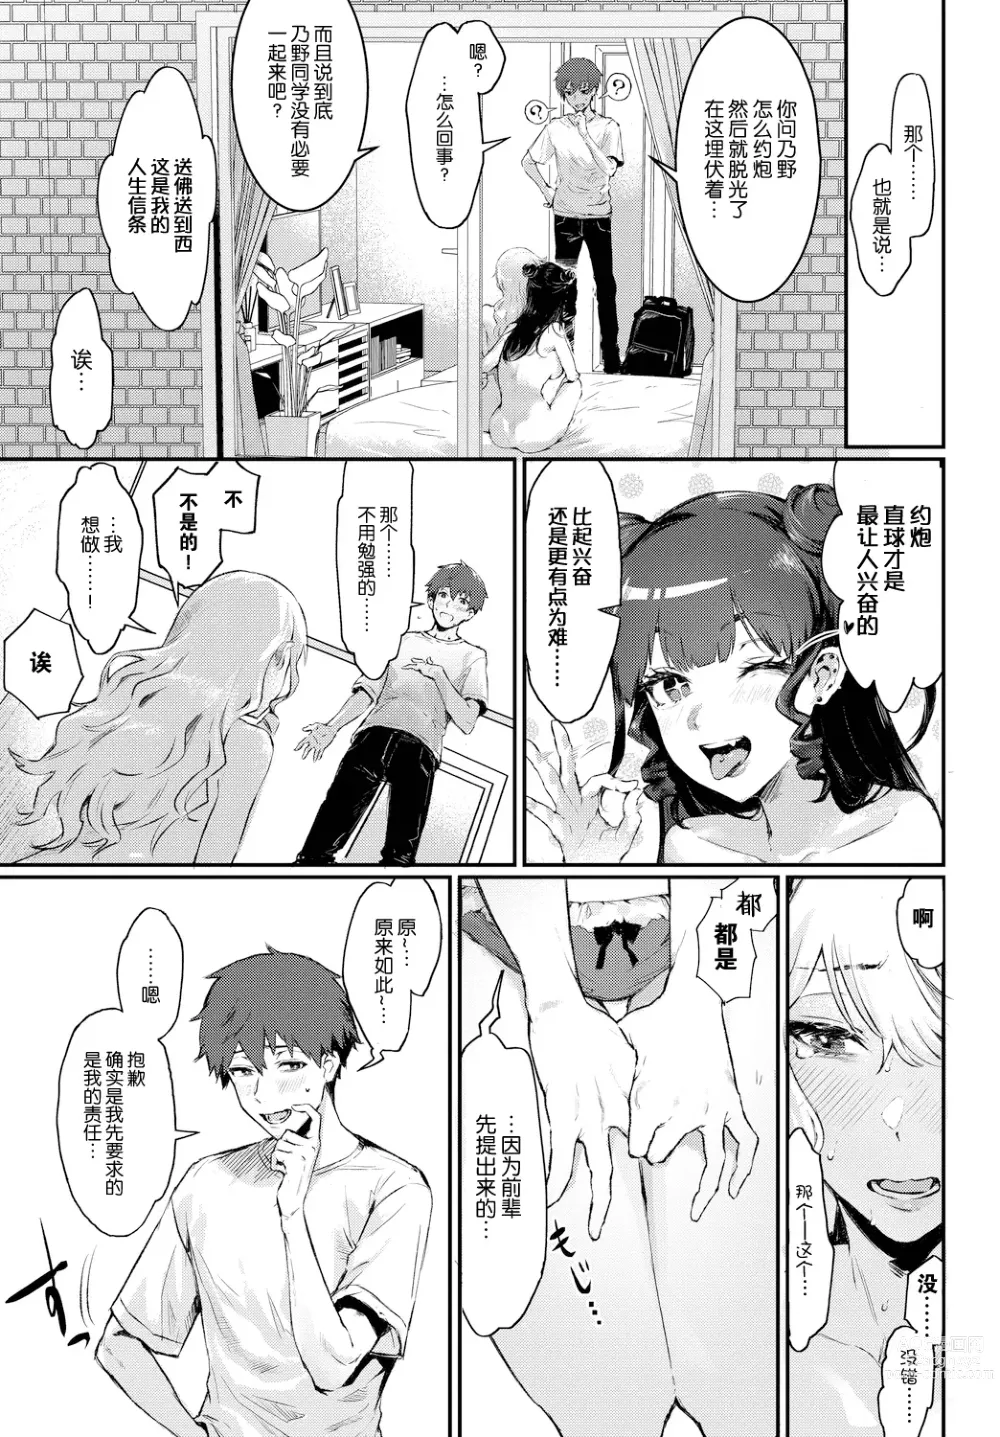 Page 7 of manga Tsuyogari Complex